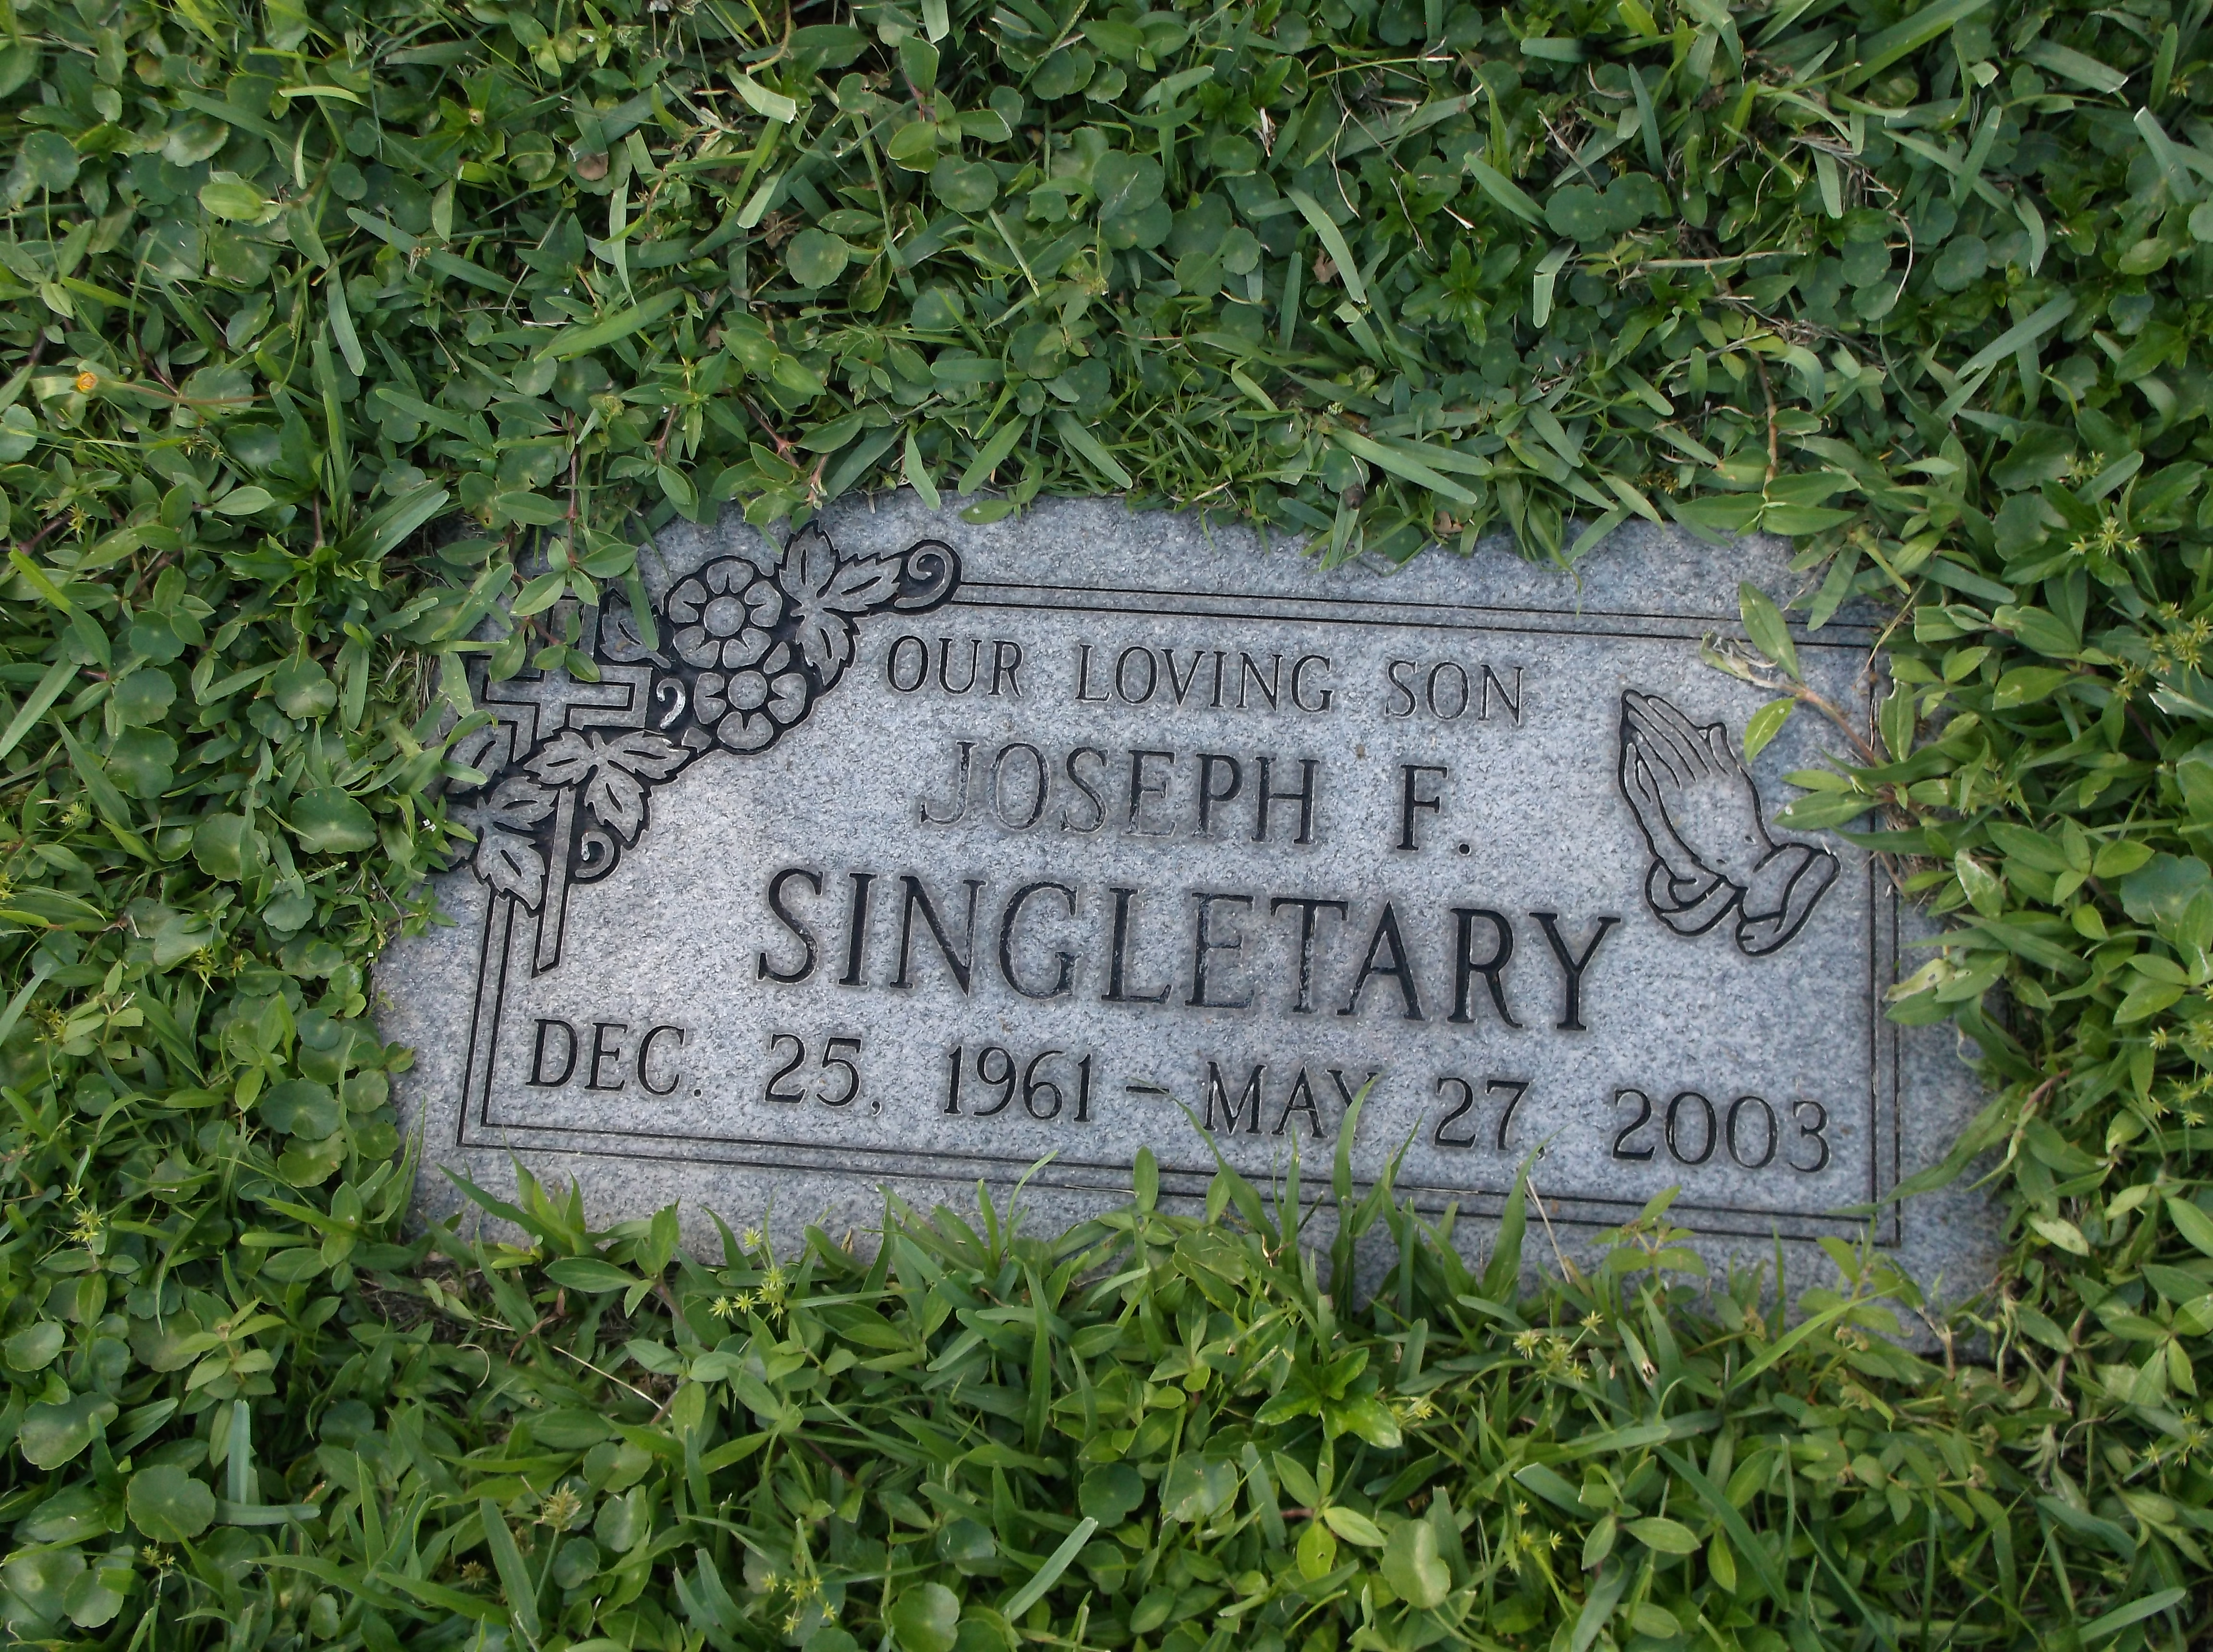 Joseph F Singletary